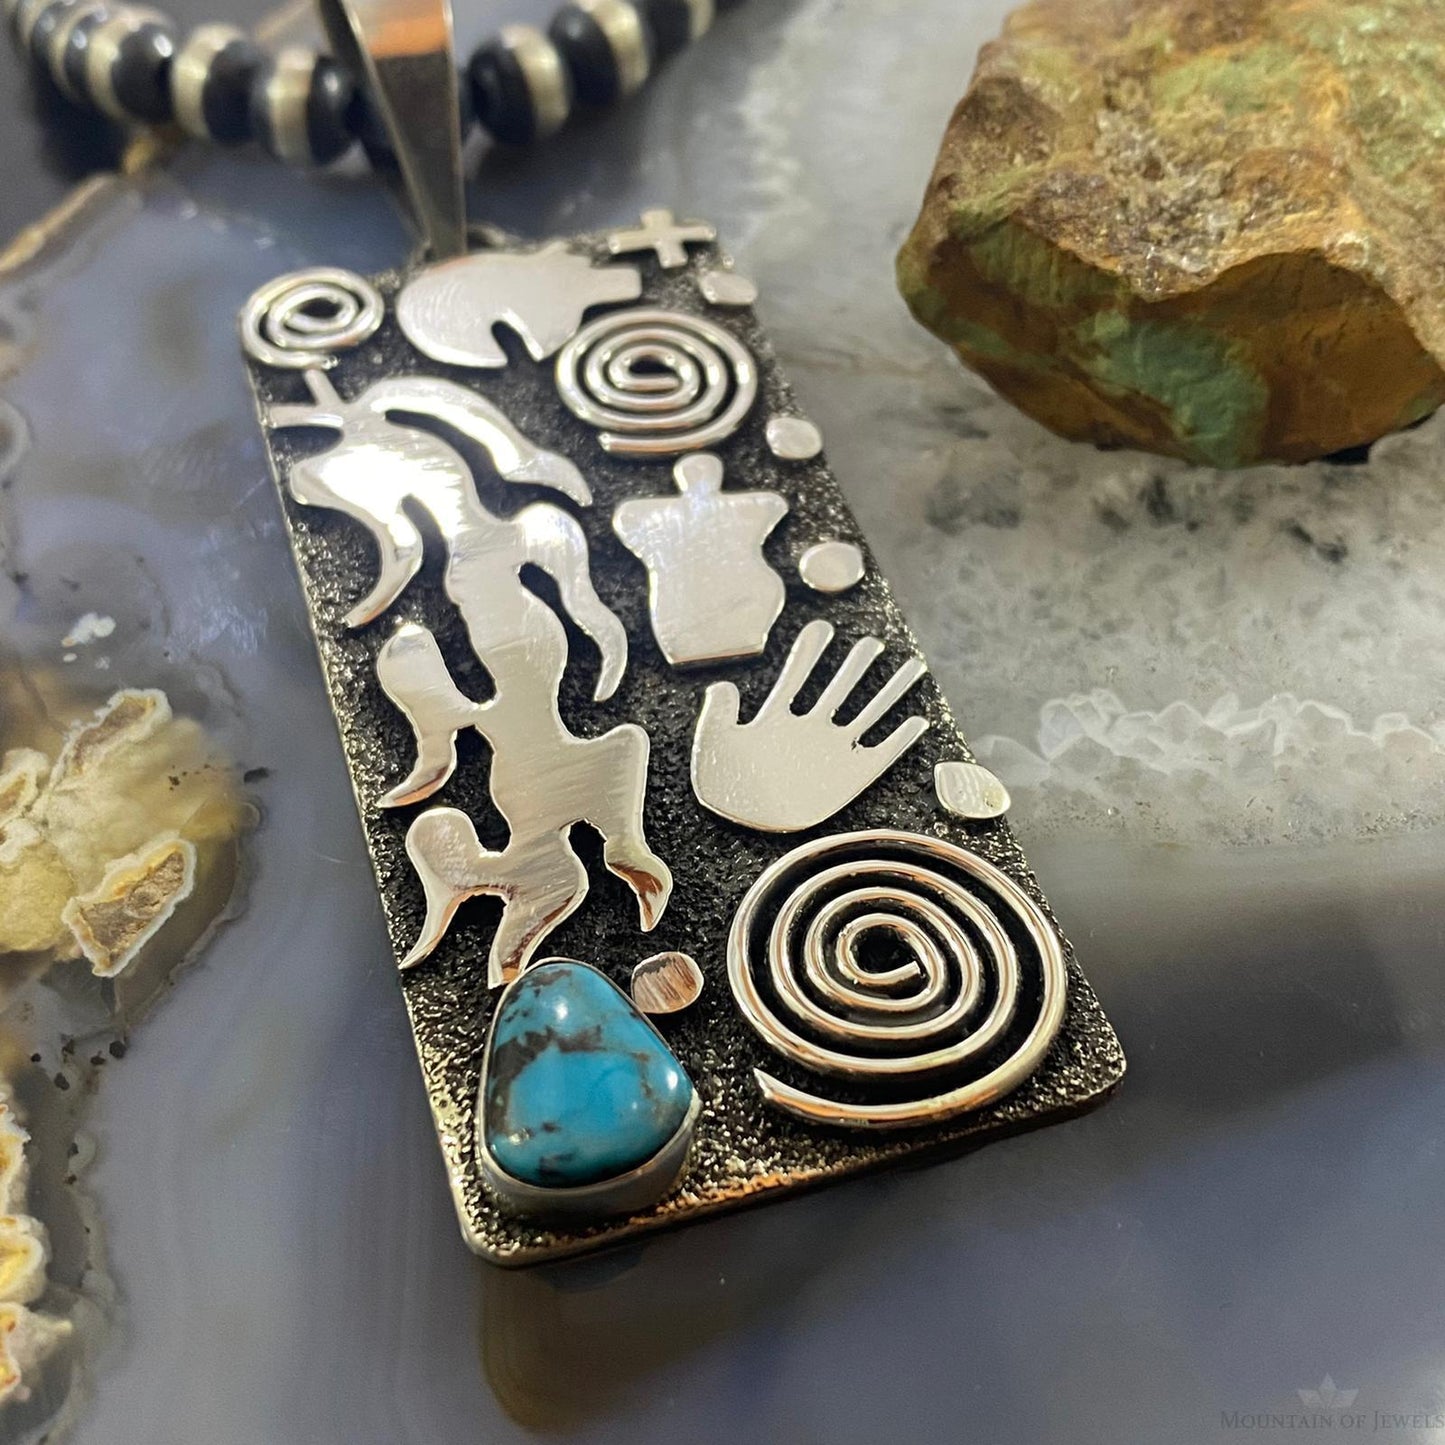 Alex Sanchez Sterling Silver Turquoise Rectangle Petroglyph Unisex Pendant #1 - Mountain of Jewels